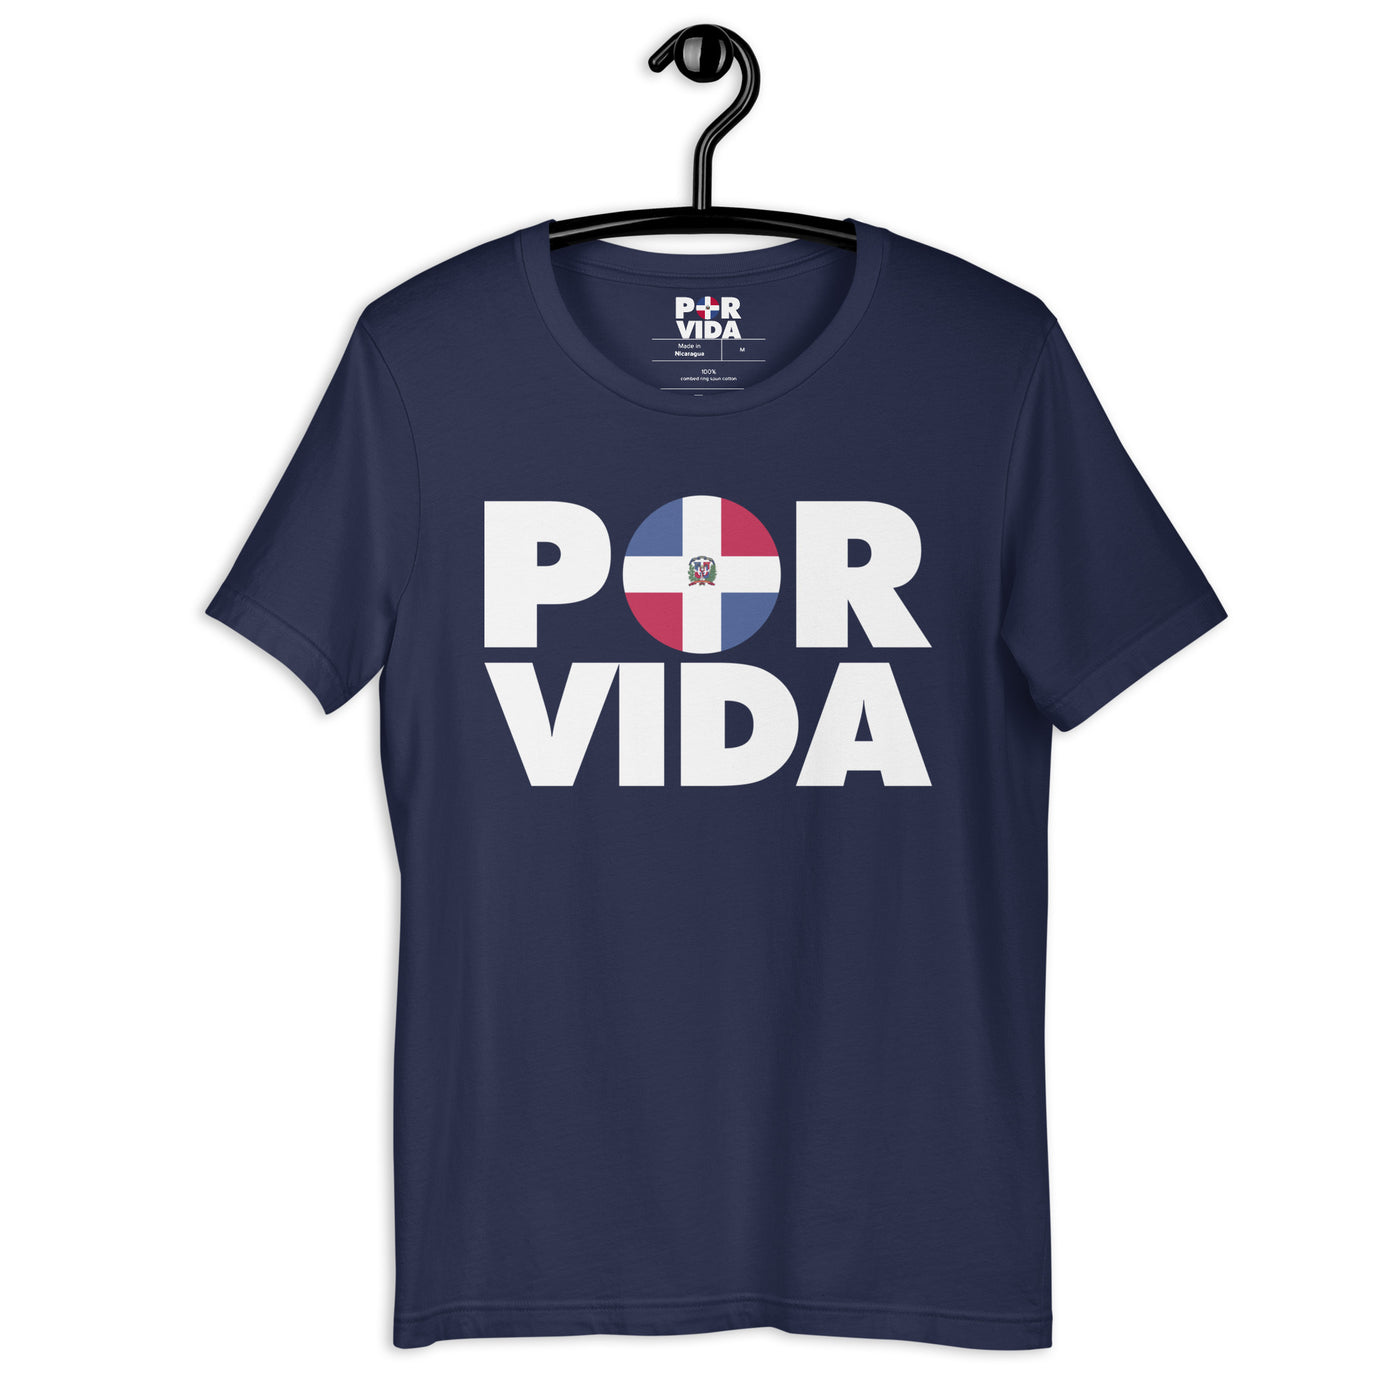 POR VIDA DR (White Text) Unisex t-shirt